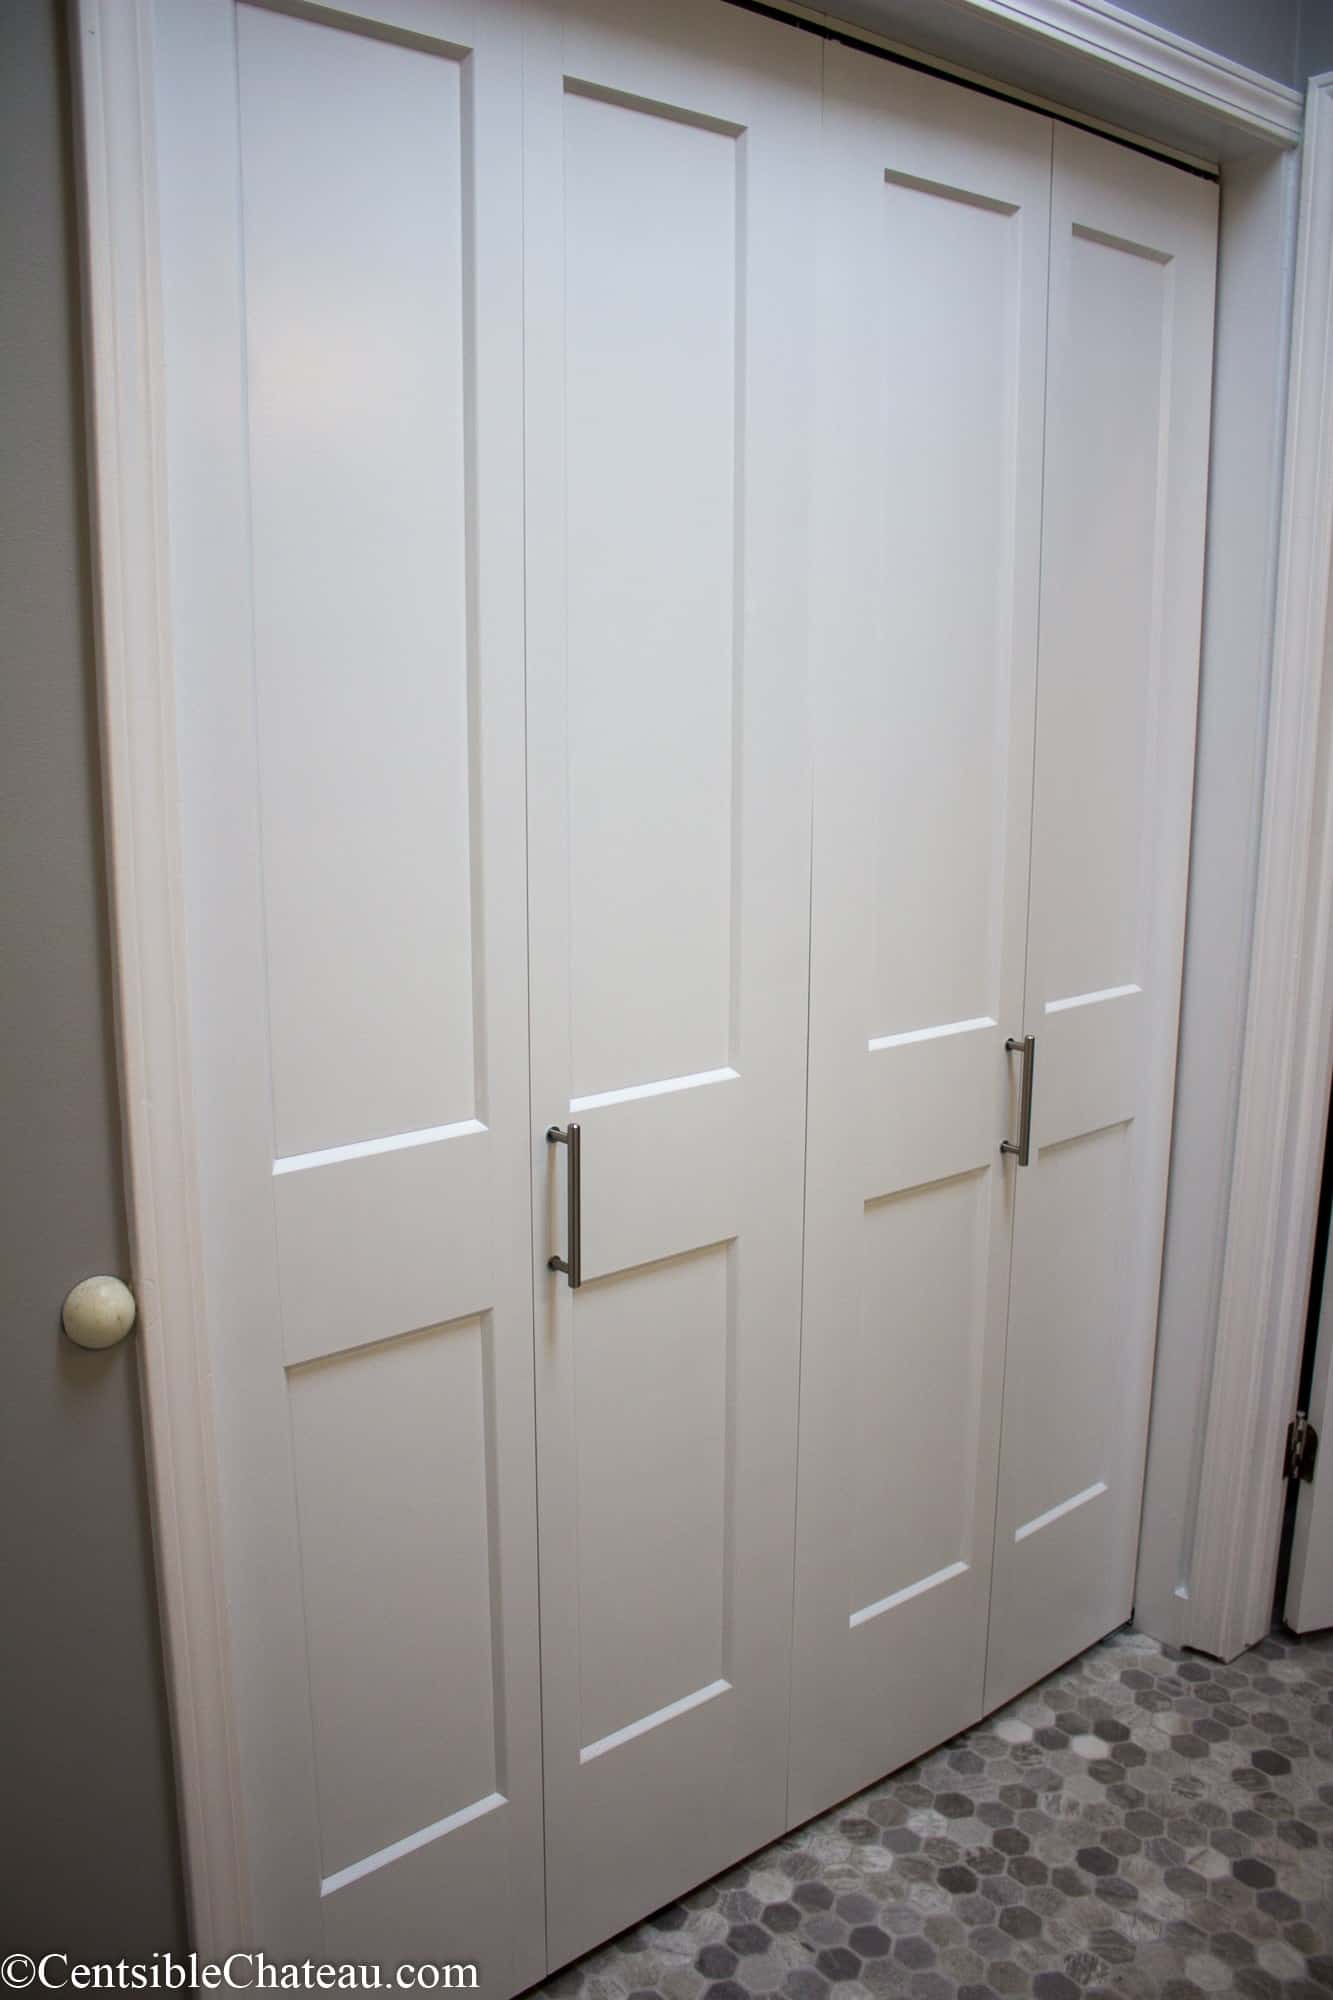 How To Install Bifold Closet Doors? – The Housing Forum